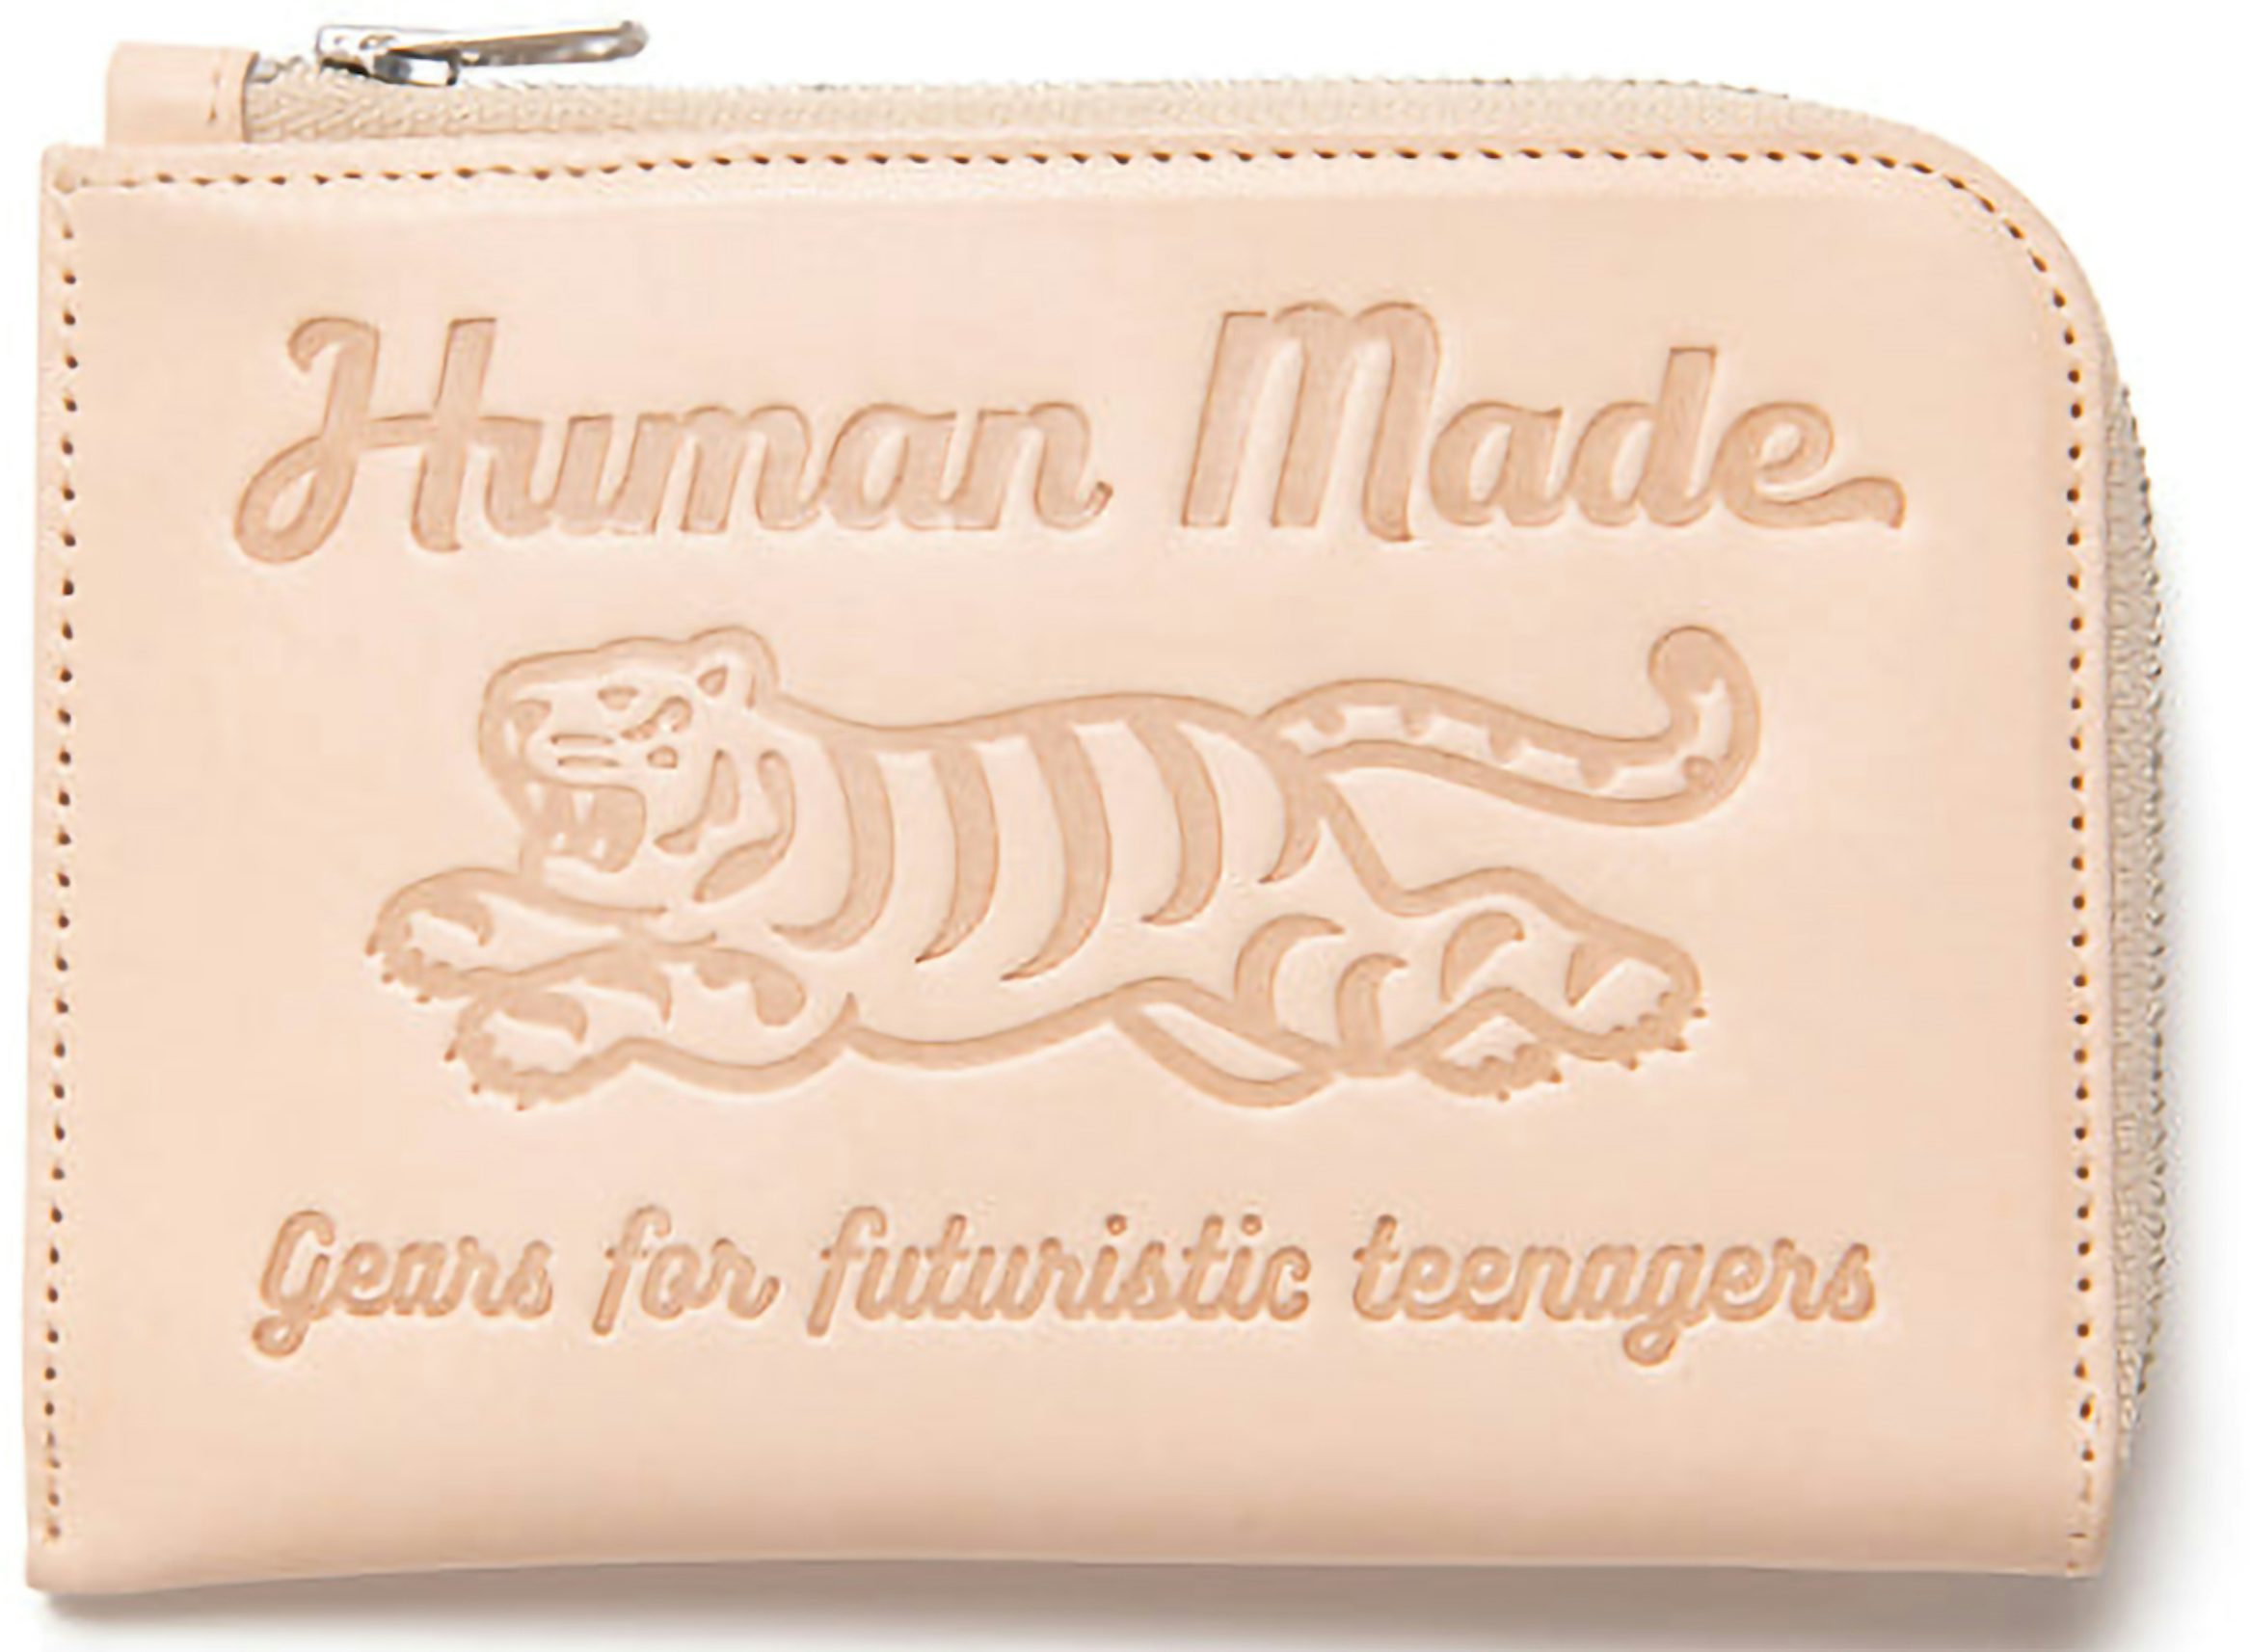 Human Made Tiger Leather Belt Beige - FW22 - CN